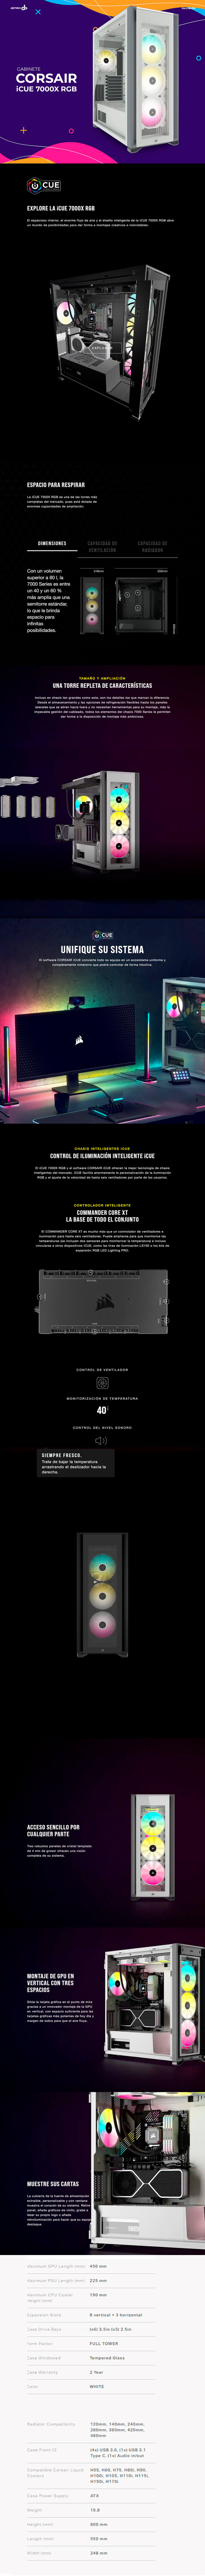 Corsair iCUE 7000X RGB Cristal Templado USB 3.0 Blanca